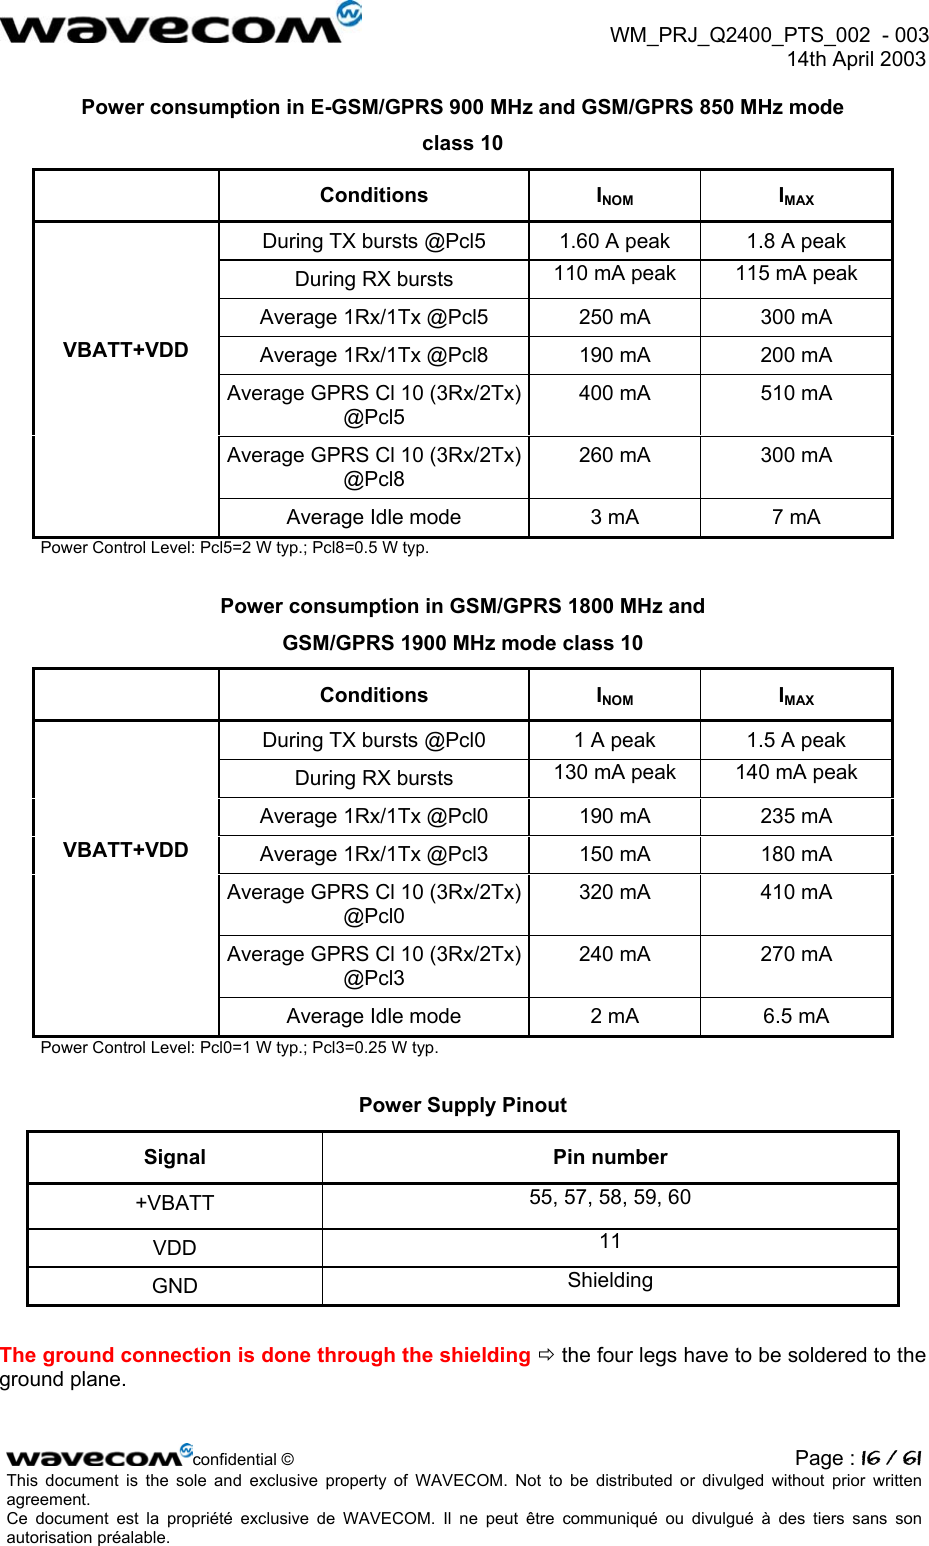  WM_PRJ_Q2400_PTS_002  - 003  14th April 2003   Power consumption in E-GSM/GPRS 900 MHz and GSM/GPRS 850 MHz mode class 10  Conditions INOM IMAX During TX bursts @Pcl5  1.60 A peak  1.8 A peak During RX bursts  110 mA peak  115 mA peak Average 1Rx/1Tx @Pcl5  250 mA  300 mA Average 1Rx/1Tx @Pcl8  190 mA  200 mA Average GPRS Cl 10 (3Rx/2Tx) @Pcl5 400 mA  510 mA Average GPRS Cl 10 (3Rx/2Tx) @Pcl8 260 mA  300 mA    VBATT+VDD    Average Idle mode  3 mA  7 mA Power Control Level: Pcl5=2 W typ.; Pcl8=0.5 W typ.  Power consumption in GSM/GPRS 1800 MHz and  GSM/GPRS 1900 MHz mode class 10  Conditions INOM IMAX During TX bursts @Pcl0  1 A peak  1.5 A peak During RX bursts  130 mA peak  140 mA peak Average 1Rx/1Tx @Pcl0  190 mA  235 mA Average 1Rx/1Tx @Pcl3  150 mA  180 mA Average GPRS Cl 10 (3Rx/2Tx) @Pcl0 320 mA  410 mA Average GPRS Cl 10 (3Rx/2Tx) @Pcl3 240 mA  270 mA    VBATT+VDD    Average Idle mode  2 mA  6.5 mA Power Control Level: Pcl0=1 W typ.; Pcl3=0.25 W typ.  Power Supply Pinout Signal Pin number +VBATT  55, 57, 58, 59, 60 VDD  11 GND  Shielding  The ground connection is done through the shielding  the four legs have to be soldered to the ground plane. confidential © Page : 16 / 61This document is the sole and exclusive property of WAVECOM. Not to be distributed or divulged without prior written agreement.  Ce document est la propriété exclusive de WAVECOM. Il ne peut être communiqué ou divulgué à des tiers sans son autorisation préalable.  